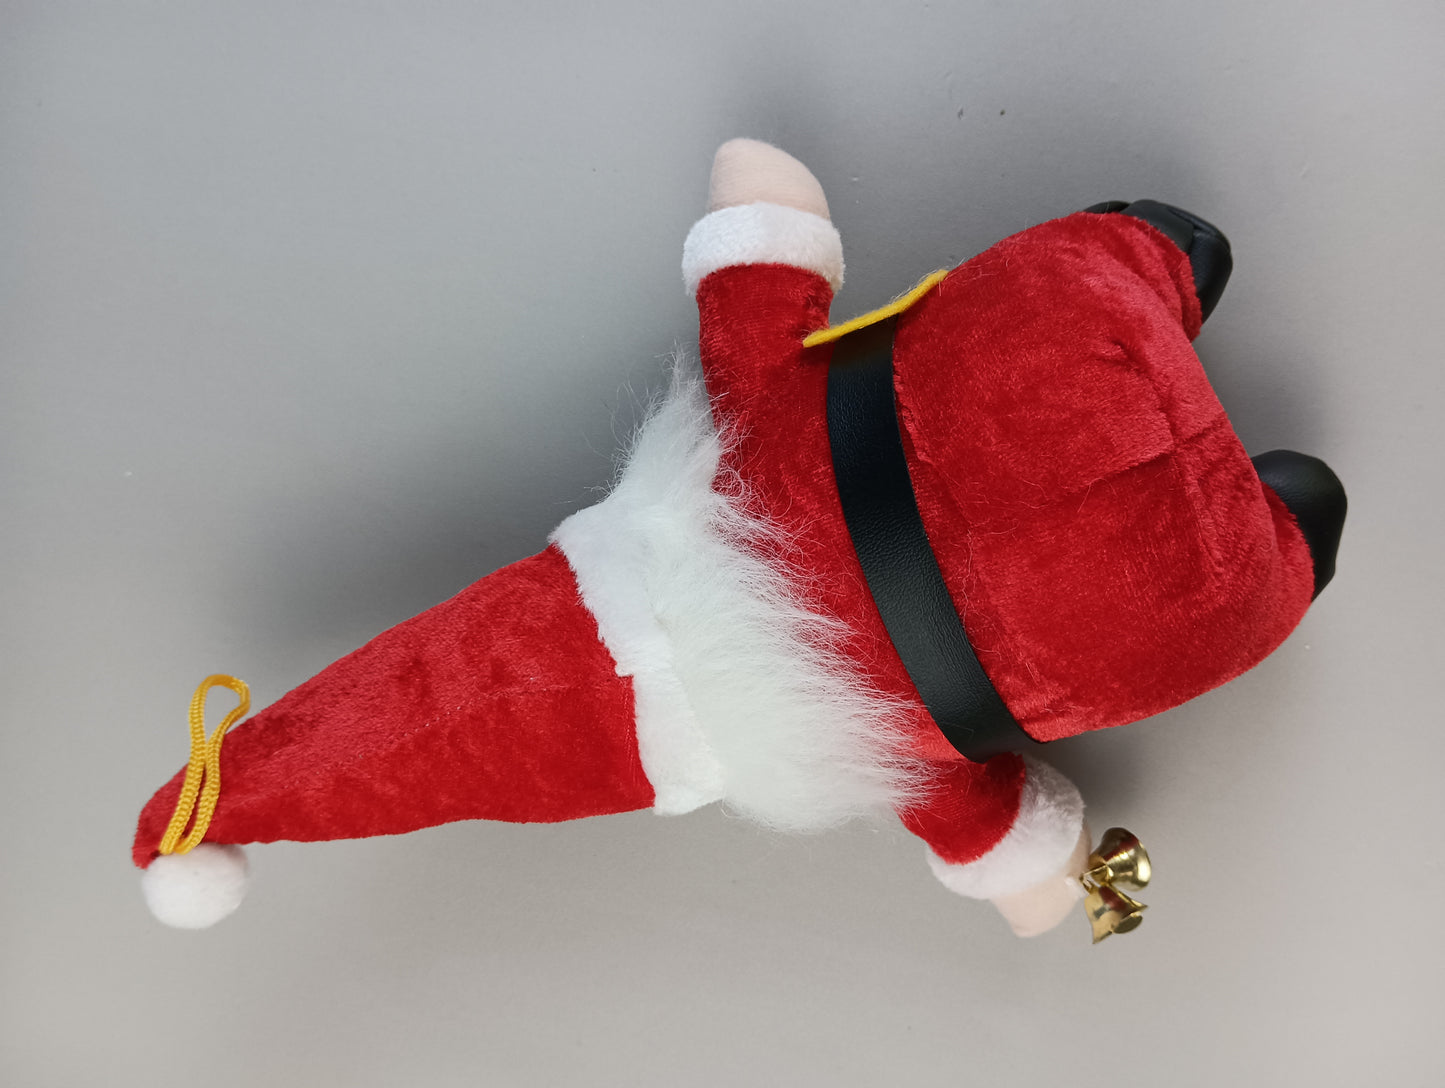 Fyyvalur Christmas doll Santa Claus doll plush toy catcher rag doll Christmas small dolls